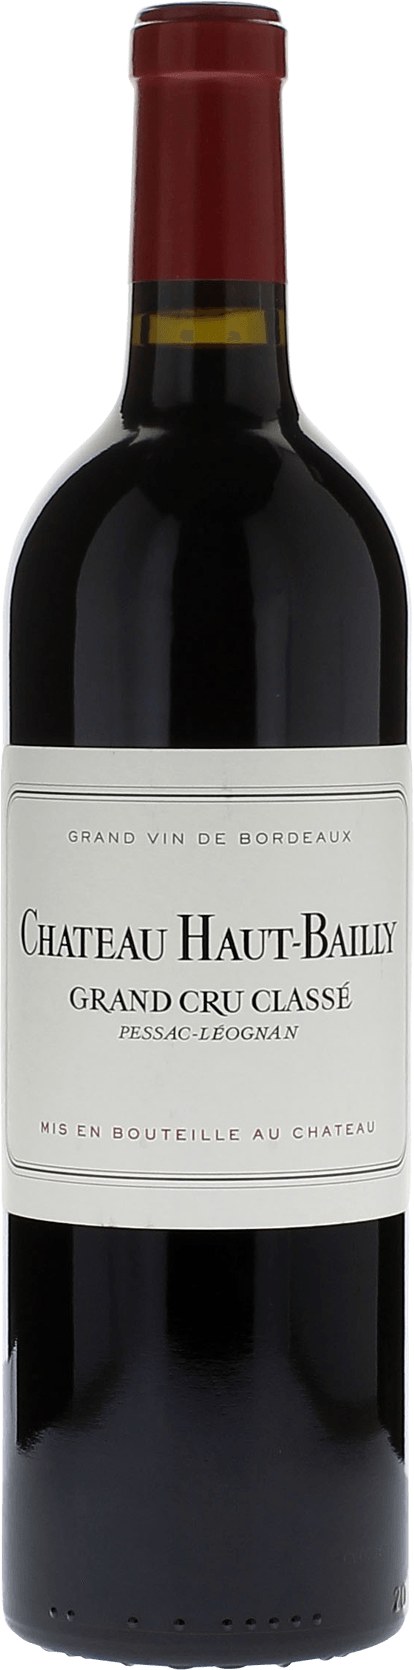 Haut bailly 2017 cru class Pessac-Lognan, Bordeaux rouge